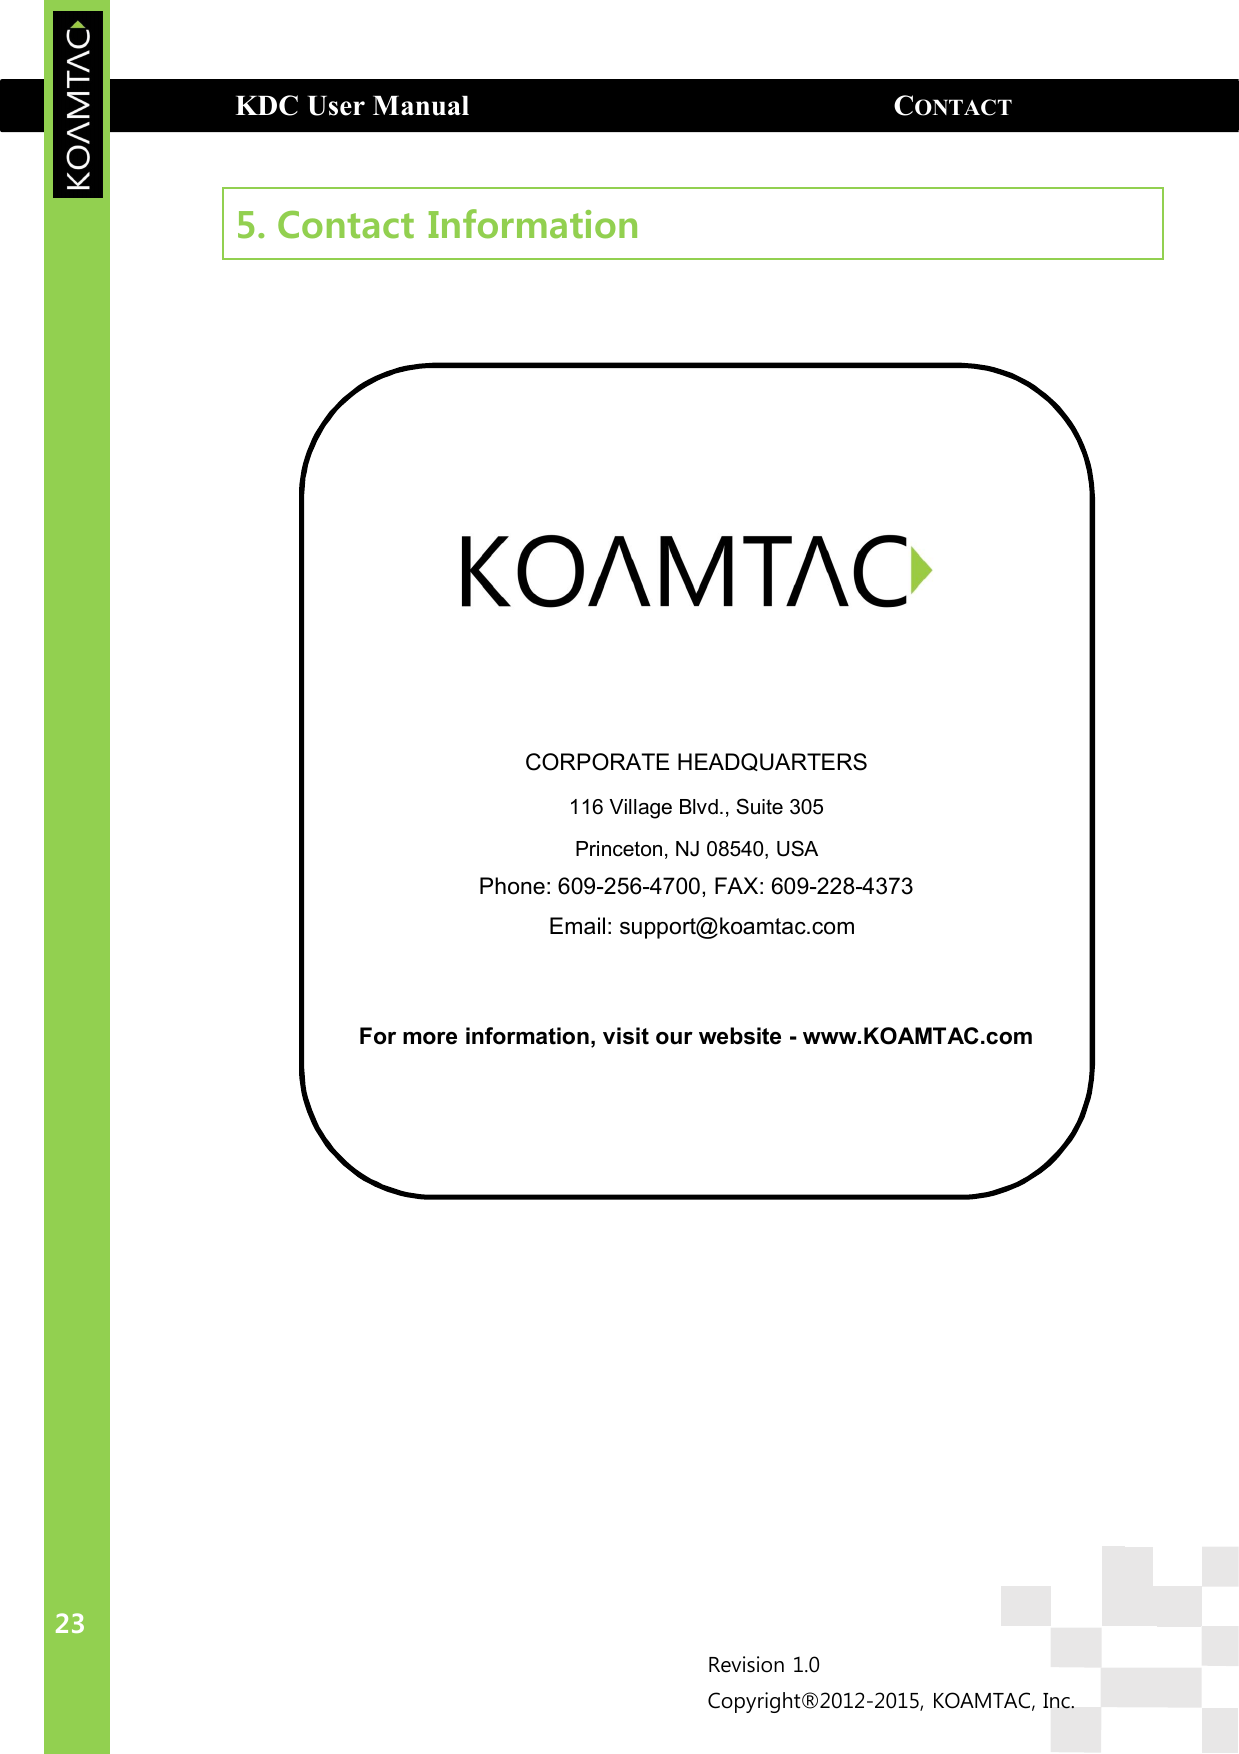  KDC User Manual                                                          CONTACT INFORMATION  23 Revision 1.0 Copyright®2012-2015, KOAMTAC, Inc.      CORPORATE HEADQUARTERS 116 Village Blvd., Suite 305 Princeton, NJ 08540, USA Phone: 609-256-4700, FAX: 609-228-4373   Email: support@koamtac.com   For more information, visit our website - www.KOAMTAC.com  5. Contact Information               